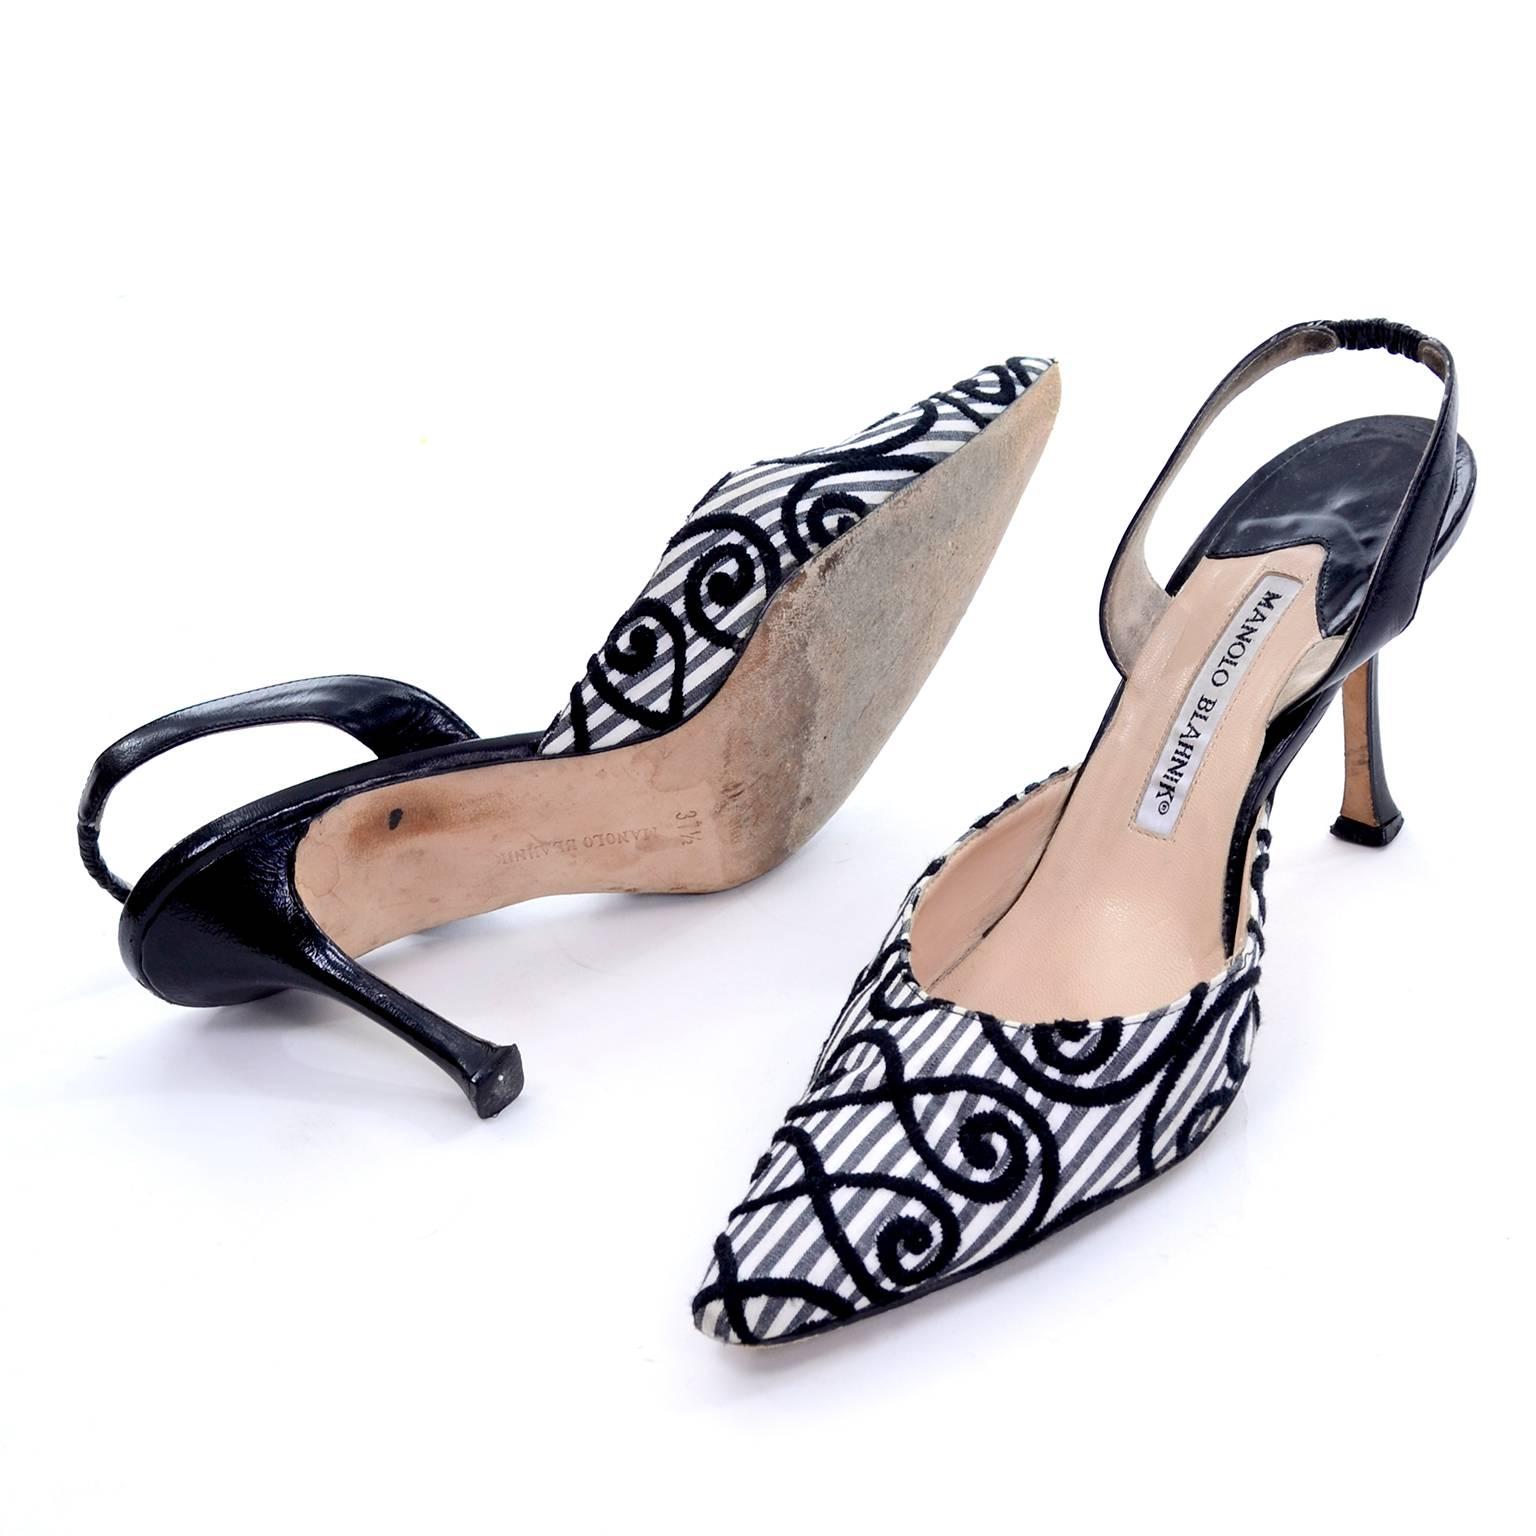 Manolo Blahnik Carolyne Sling Back Shoes in Black & White Swirls Size 37.5 In Good Condition In Portland, OR